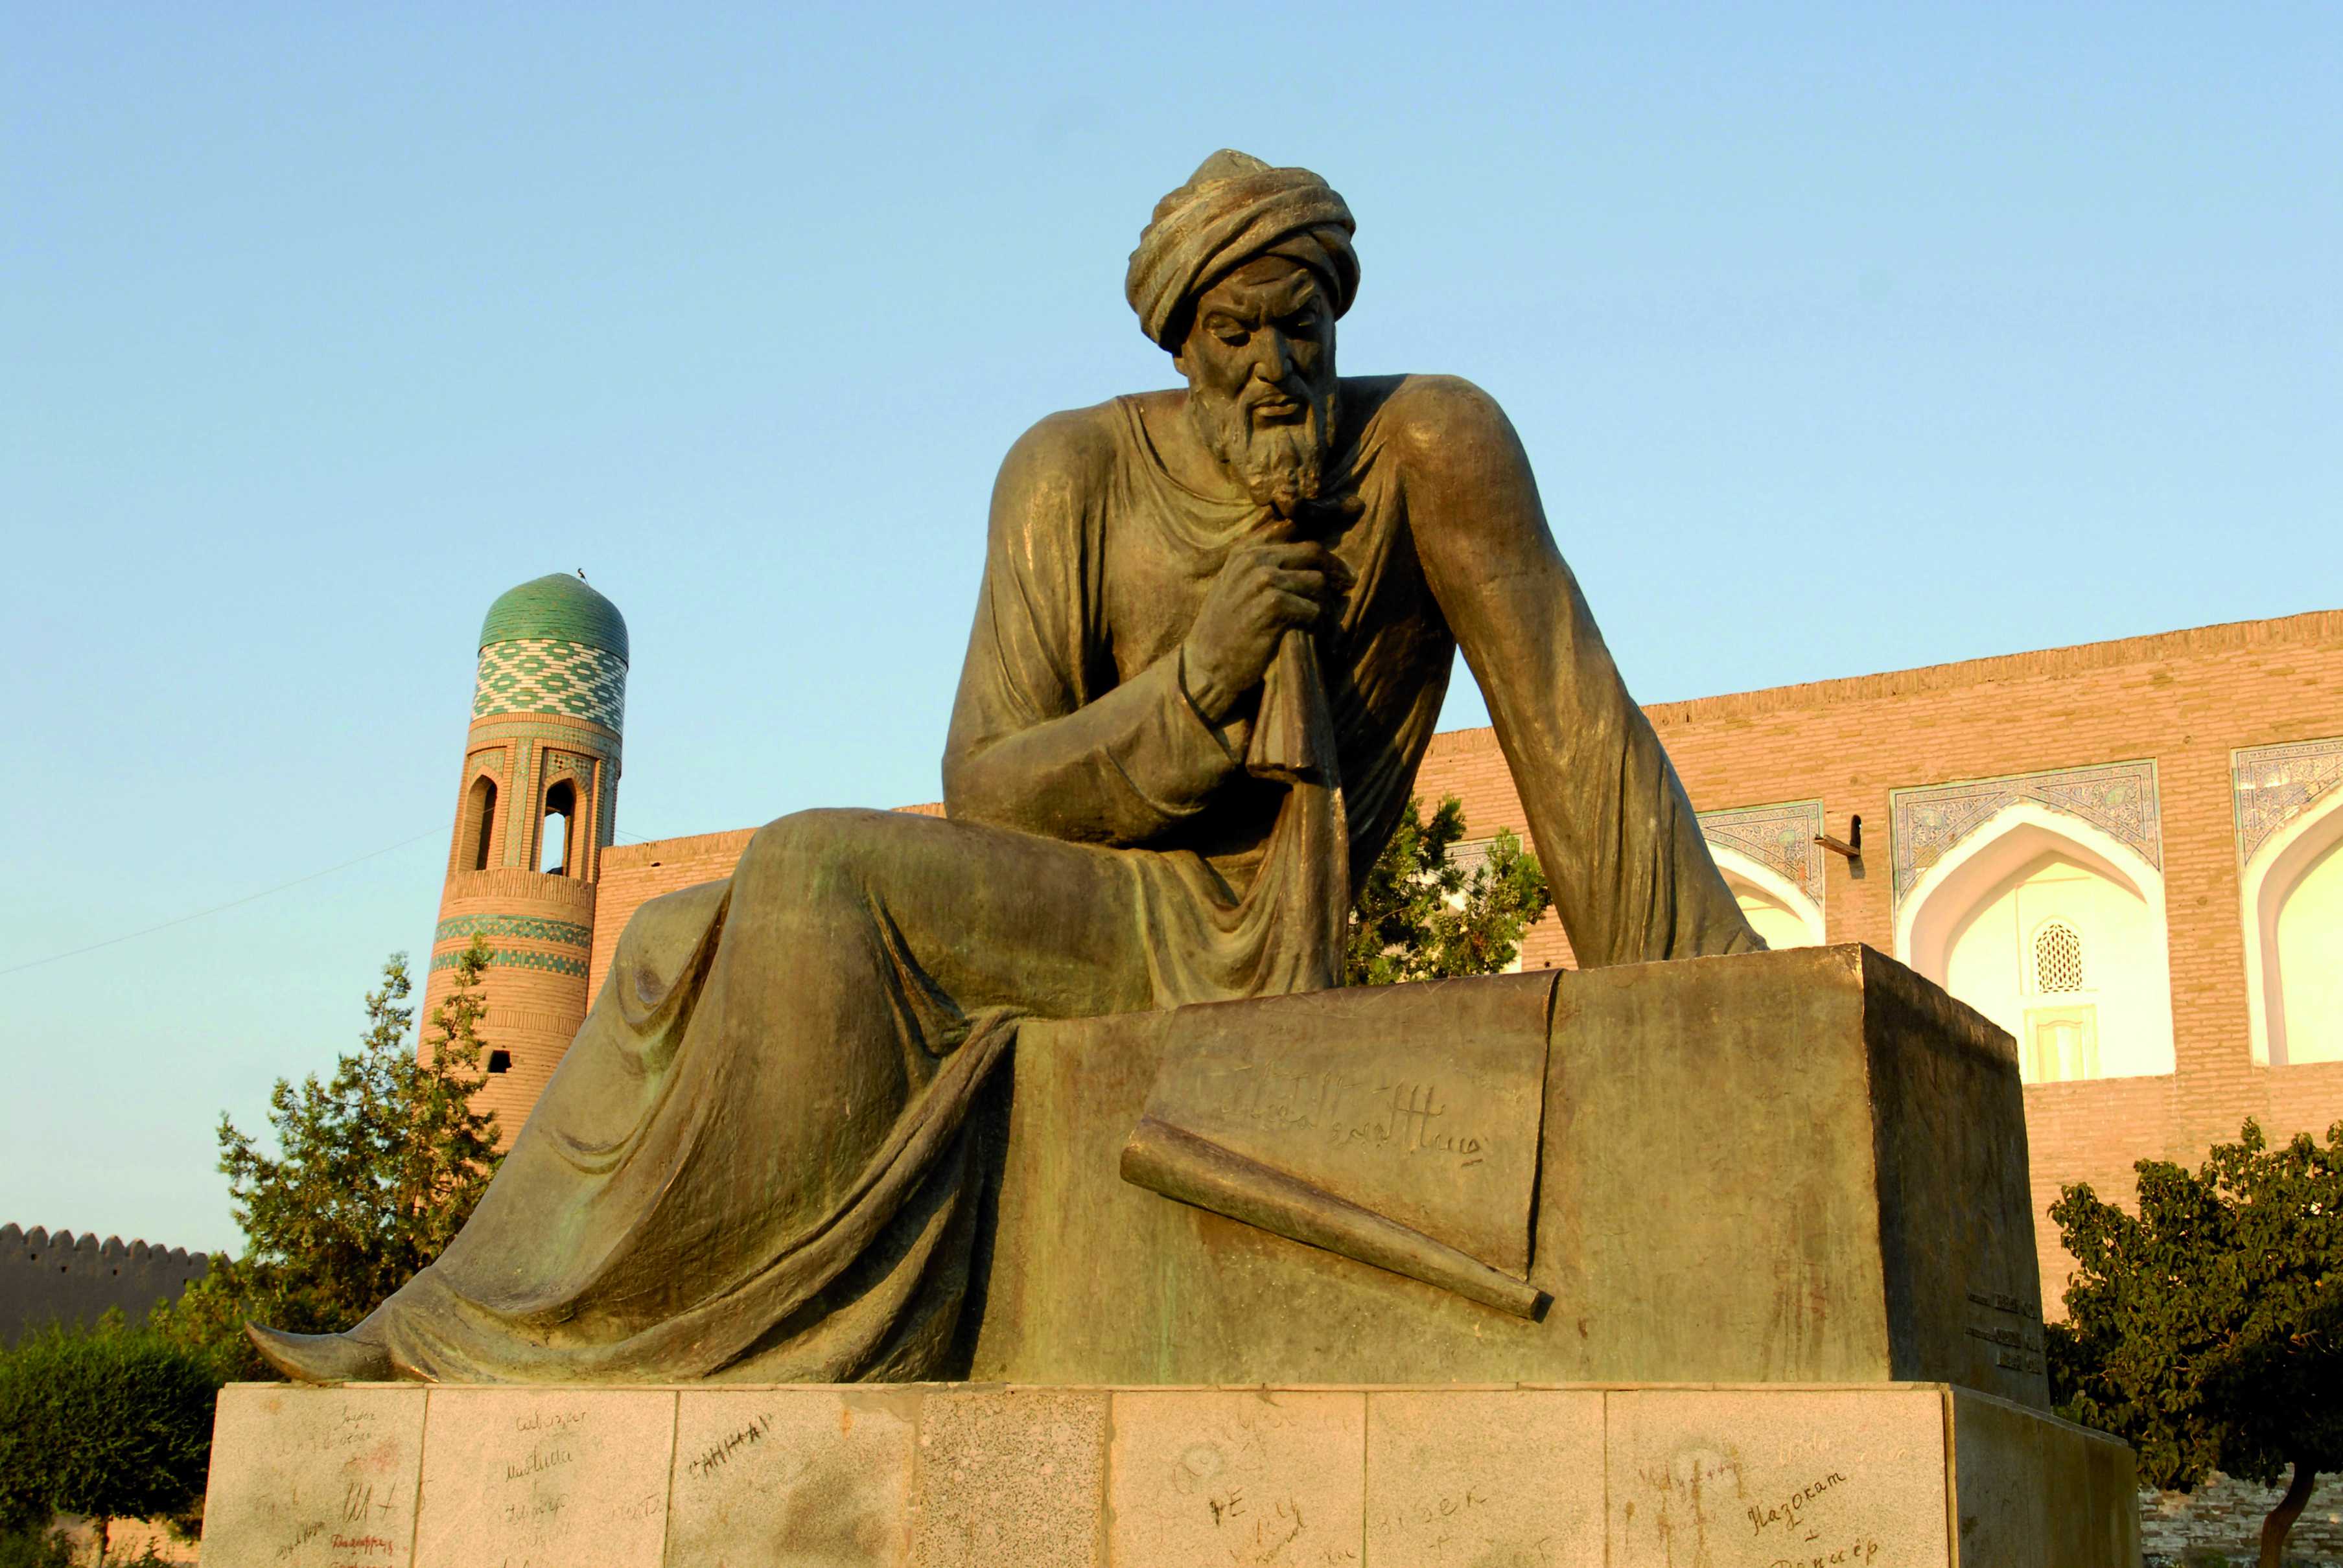 La statue d'Al-Khawarizmi, originaire de la région de Khiva, qui introduisit l'algèbre dans les mathématiques.